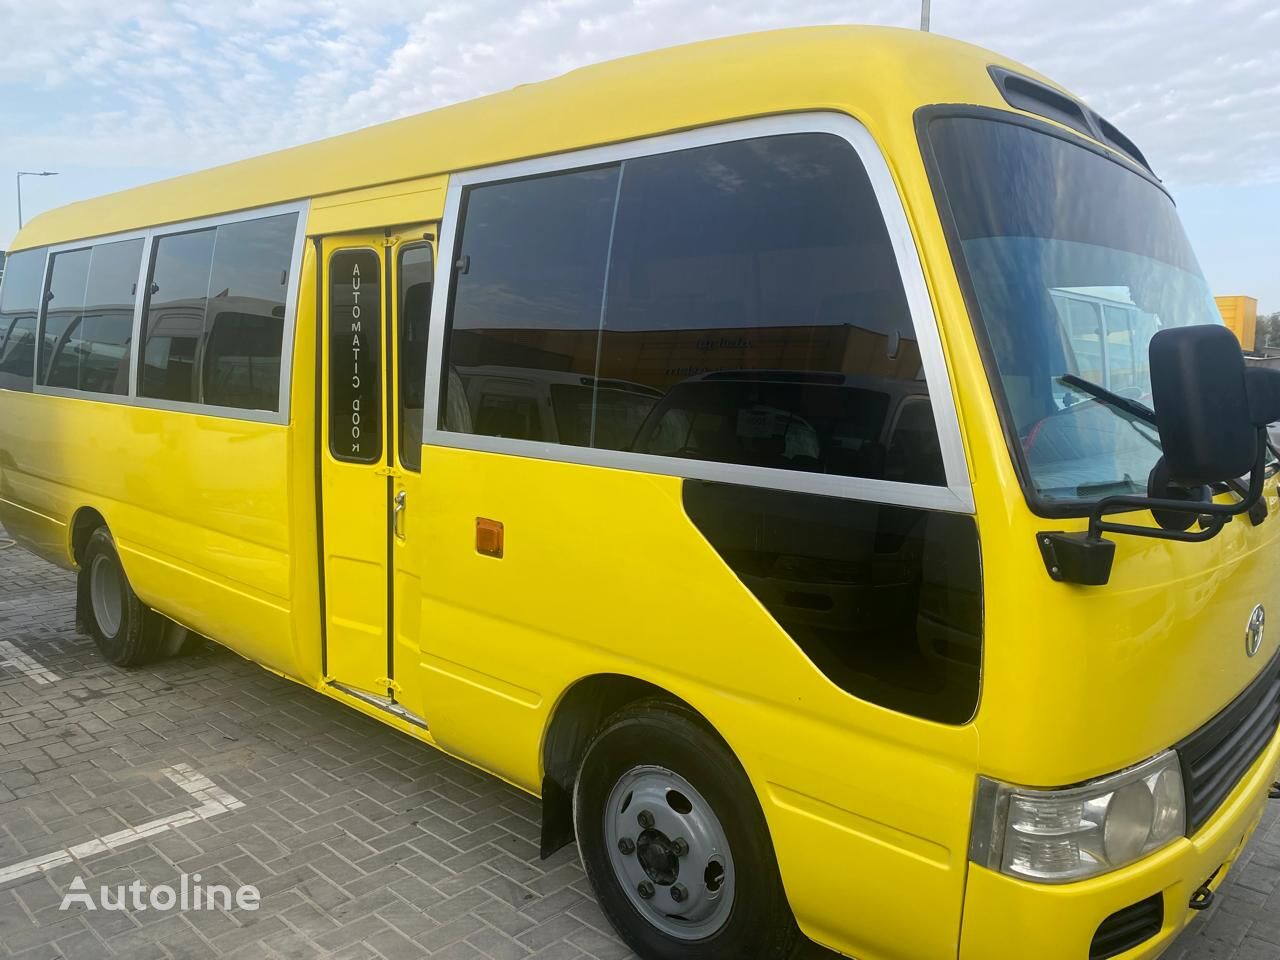 Toyota Coaster Coach bus (LHD) Reisebus